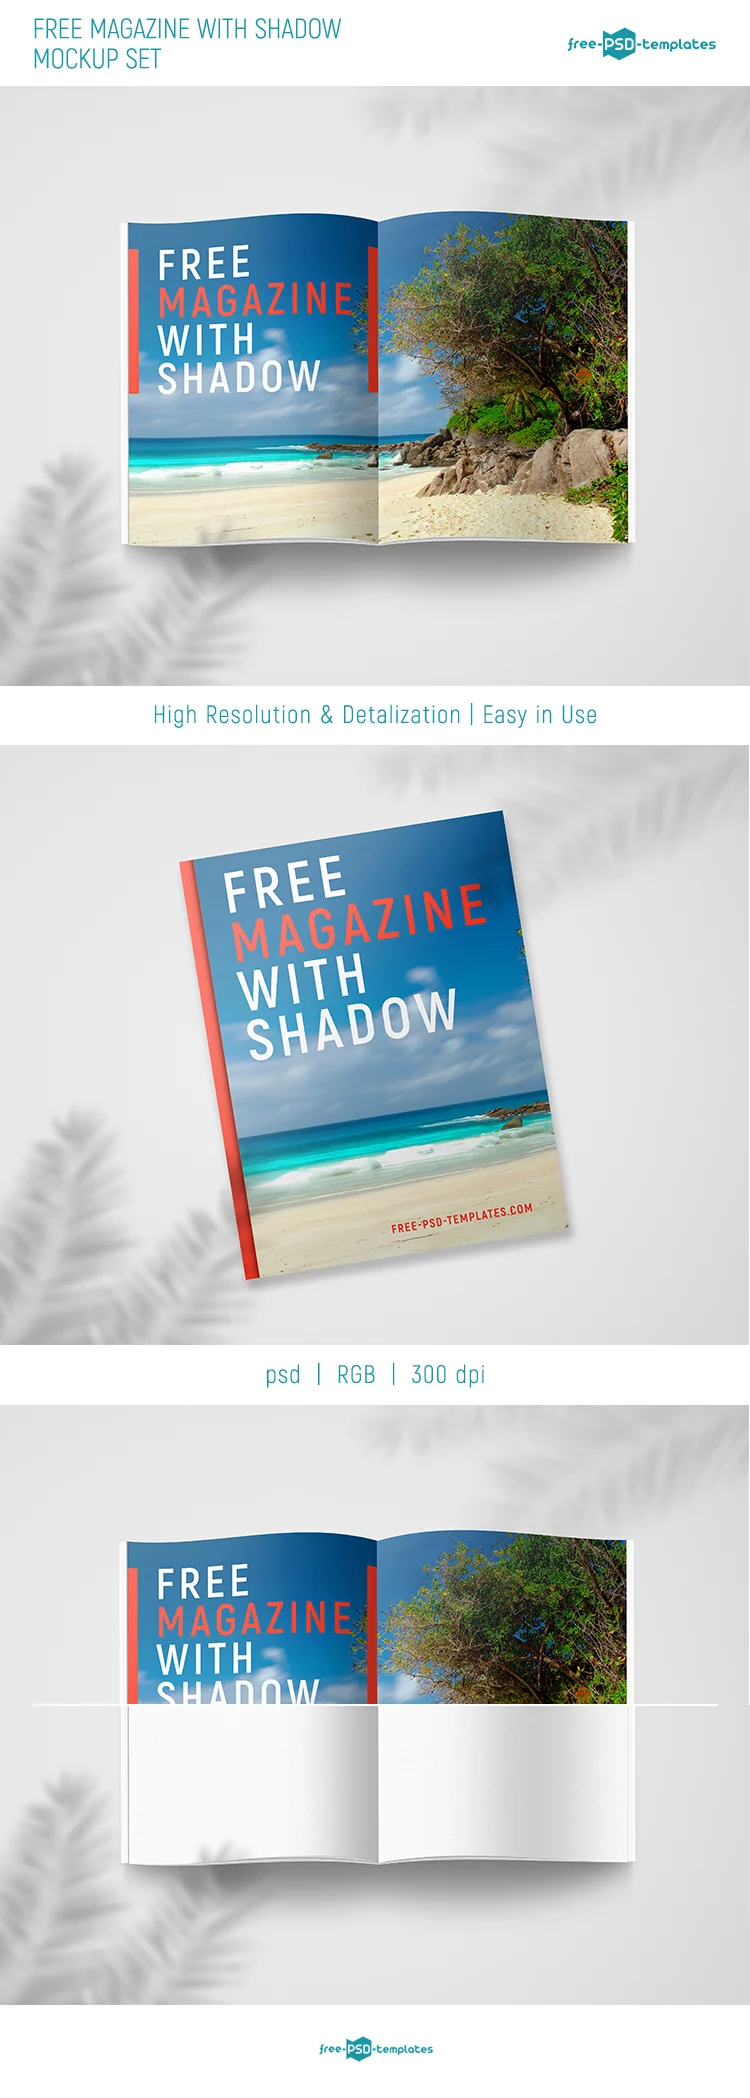 Free Magazine With Shadow Mockup Set